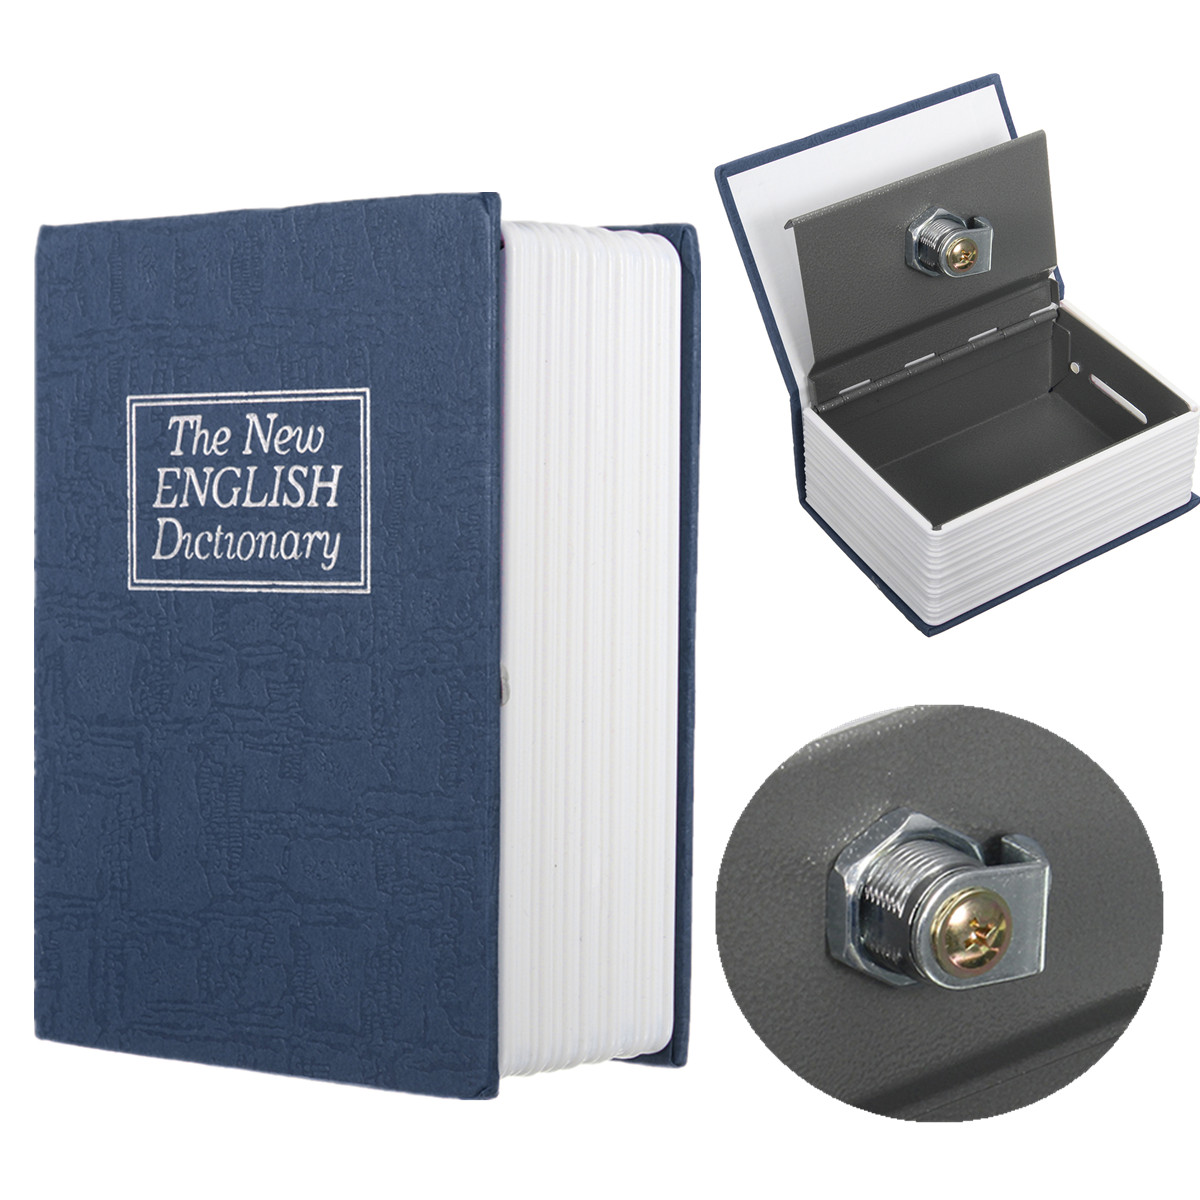 Dictionary-Security-Safe-Box-Hidden-Security-Key-Lock-Book-Cash-Jewellery-1304637-3